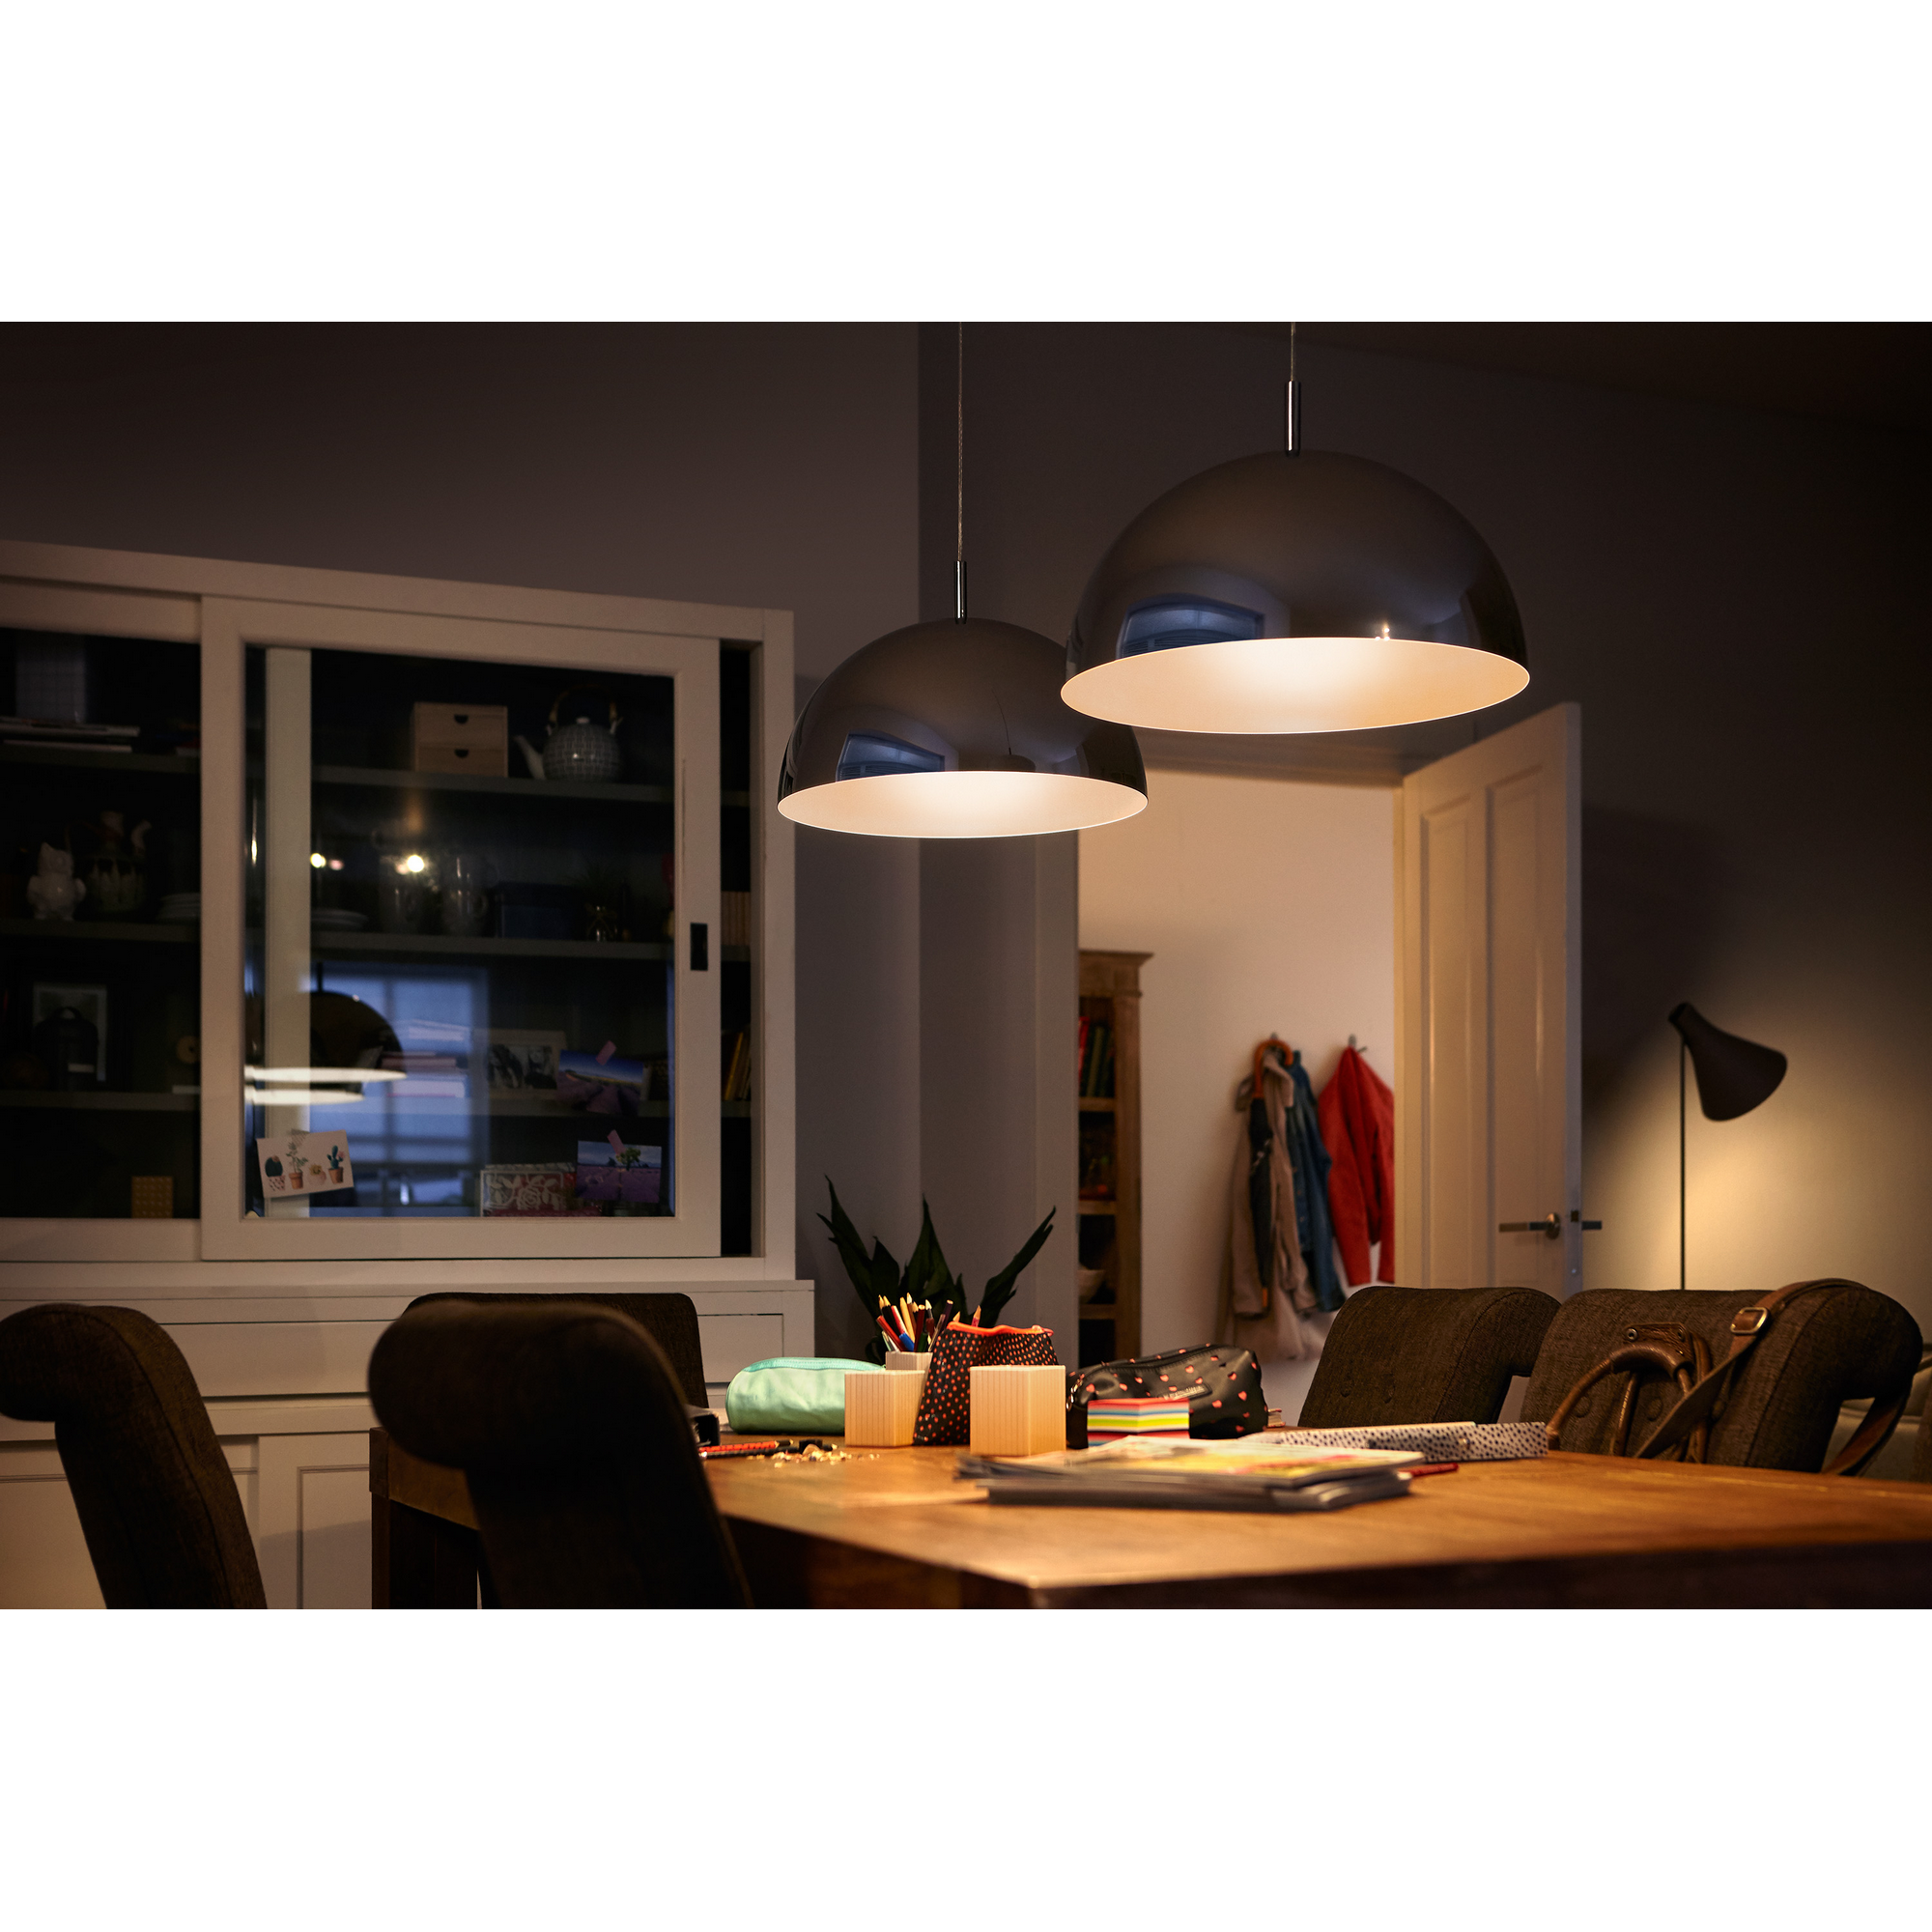 LED Lampe Kerzenform 2,2 W E14warmweiß 250 lm + product picture